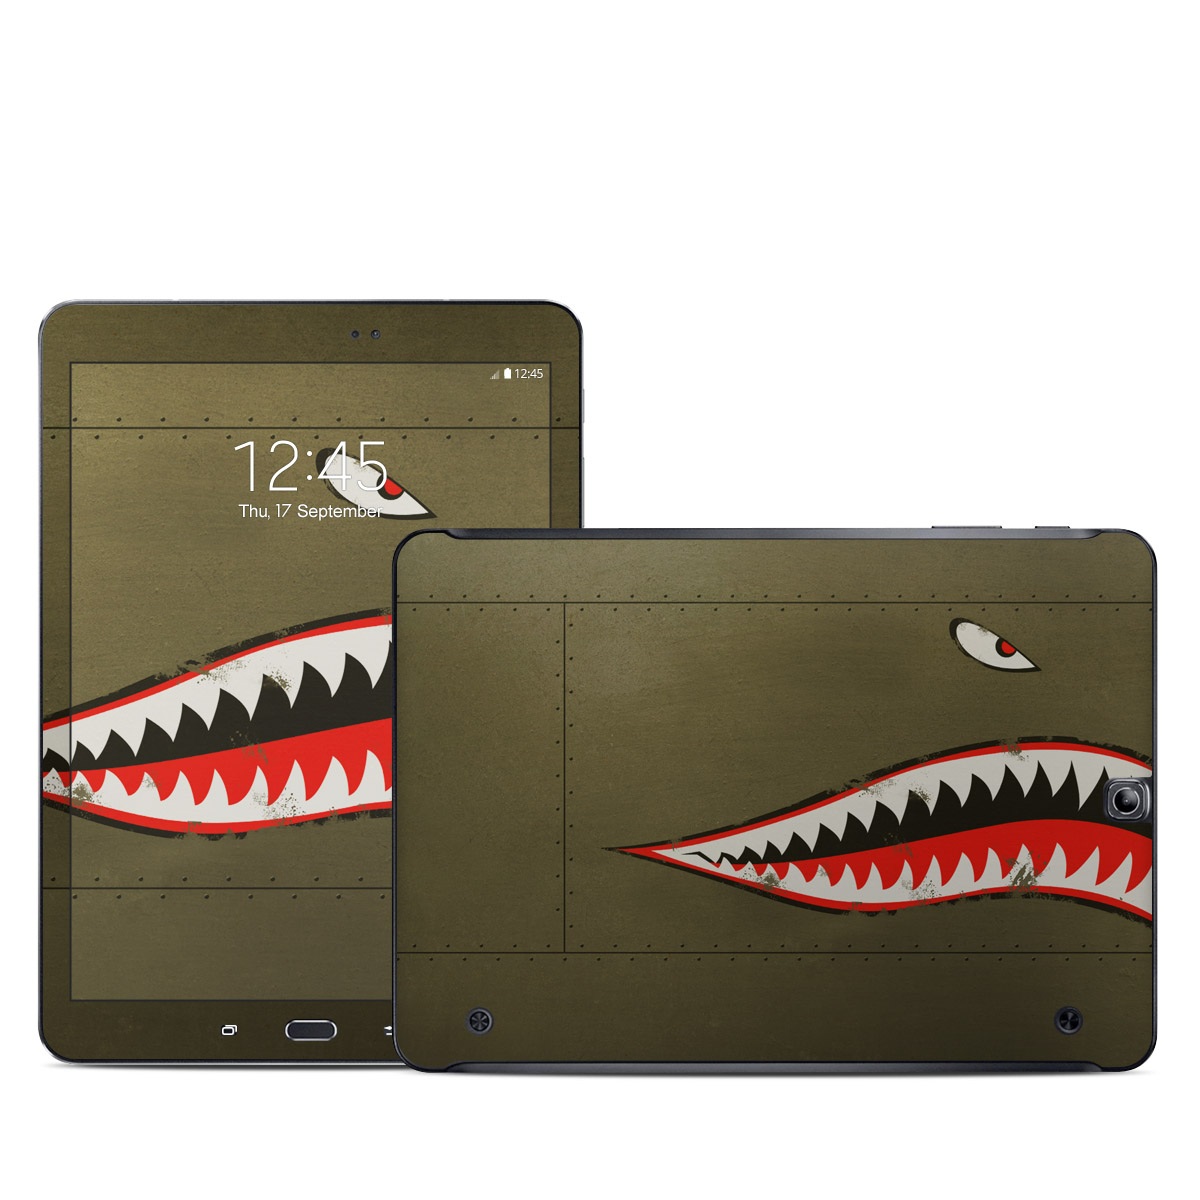 Samsung Galaxy Tab S2 9-7 Skin - USAF Shark (Image 1)